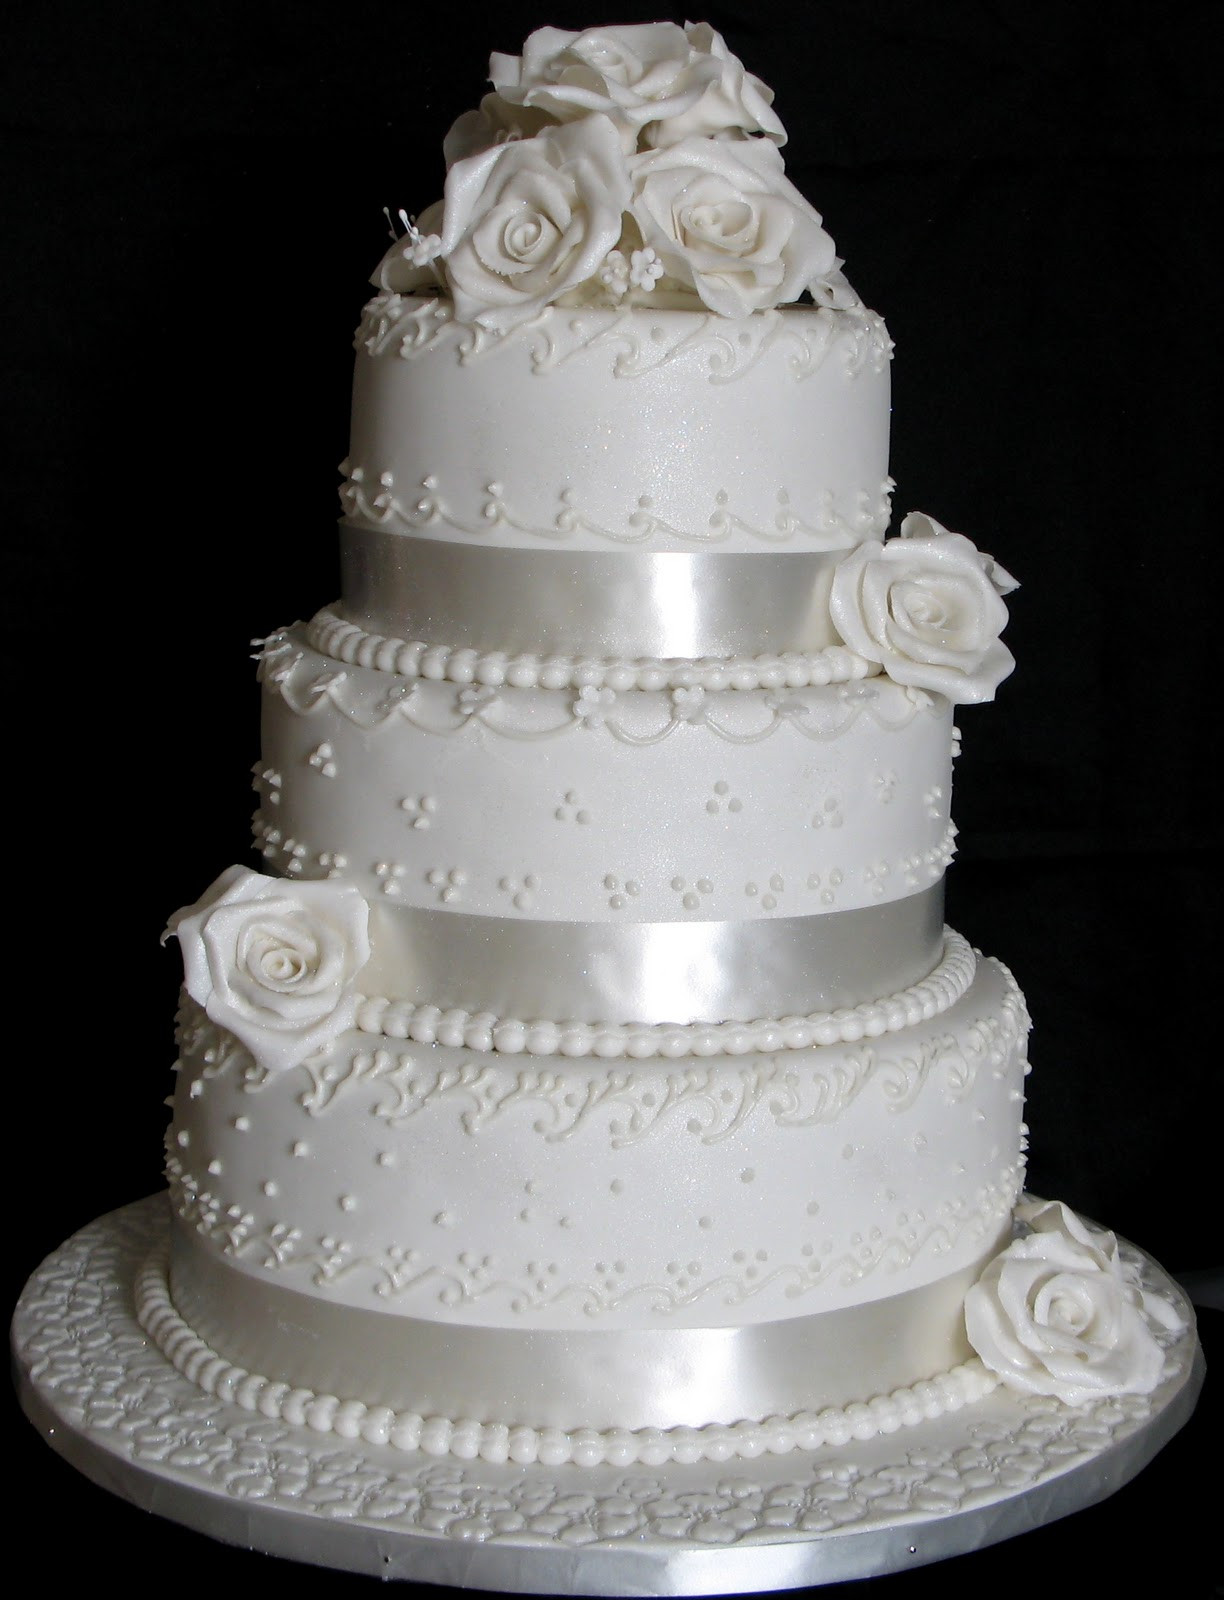 3 Layers Wedding Cakes
 3 layered wedding cake idea in 2017